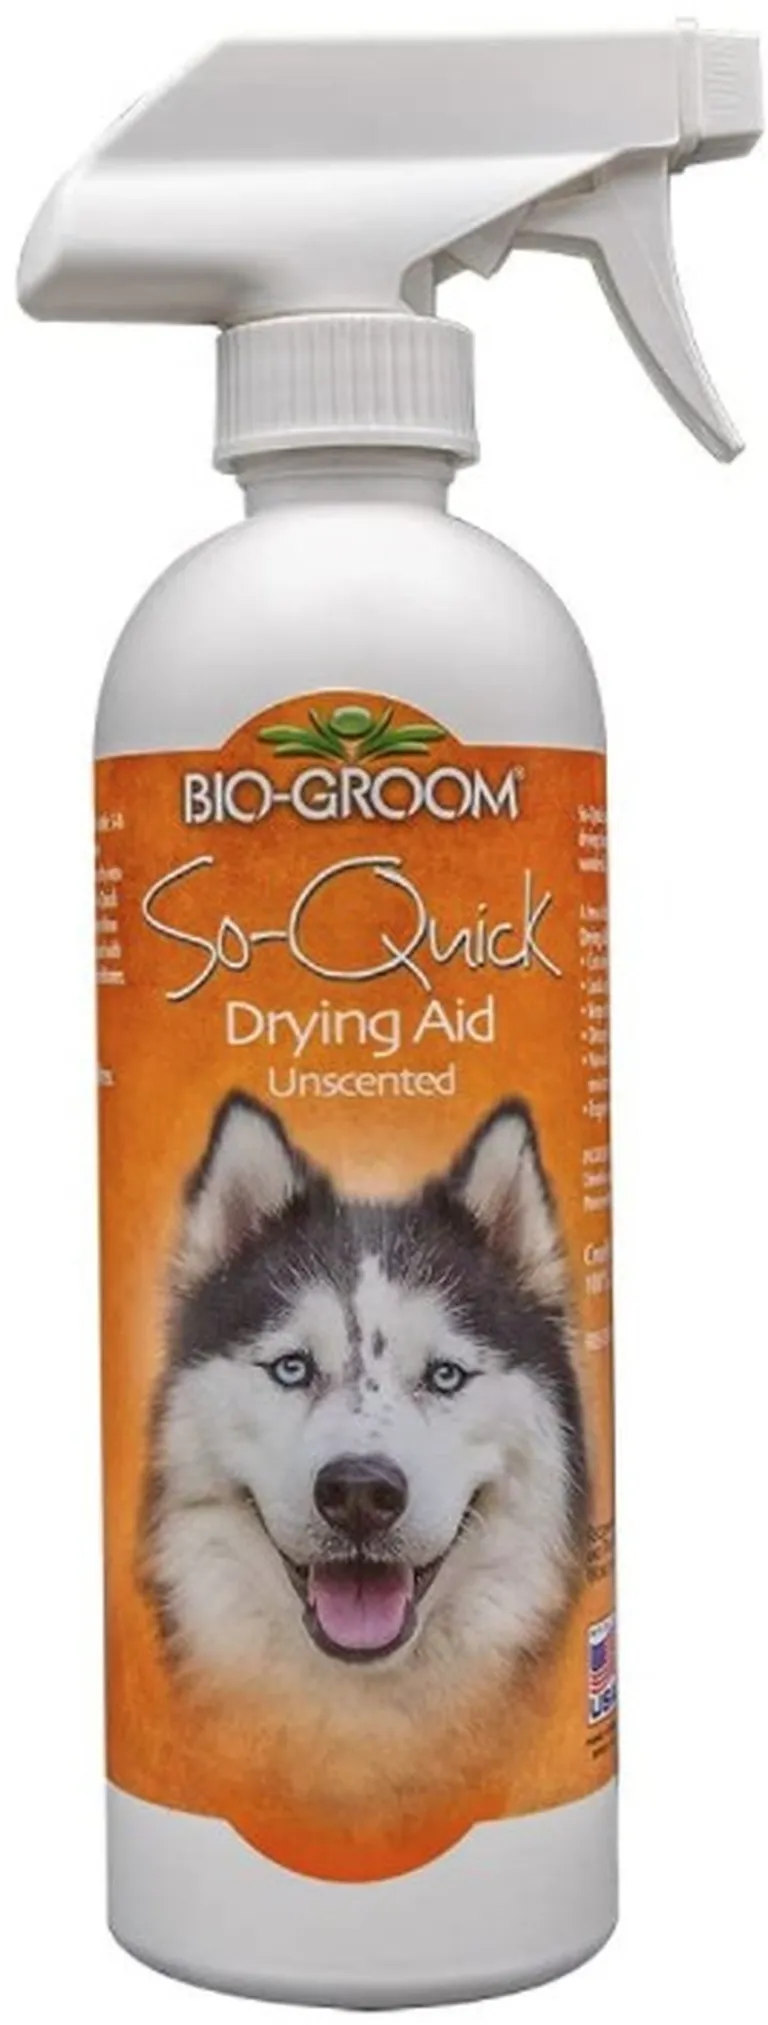 Bio Groom So-Quick Drying Aid Grooming Spray Photo 1